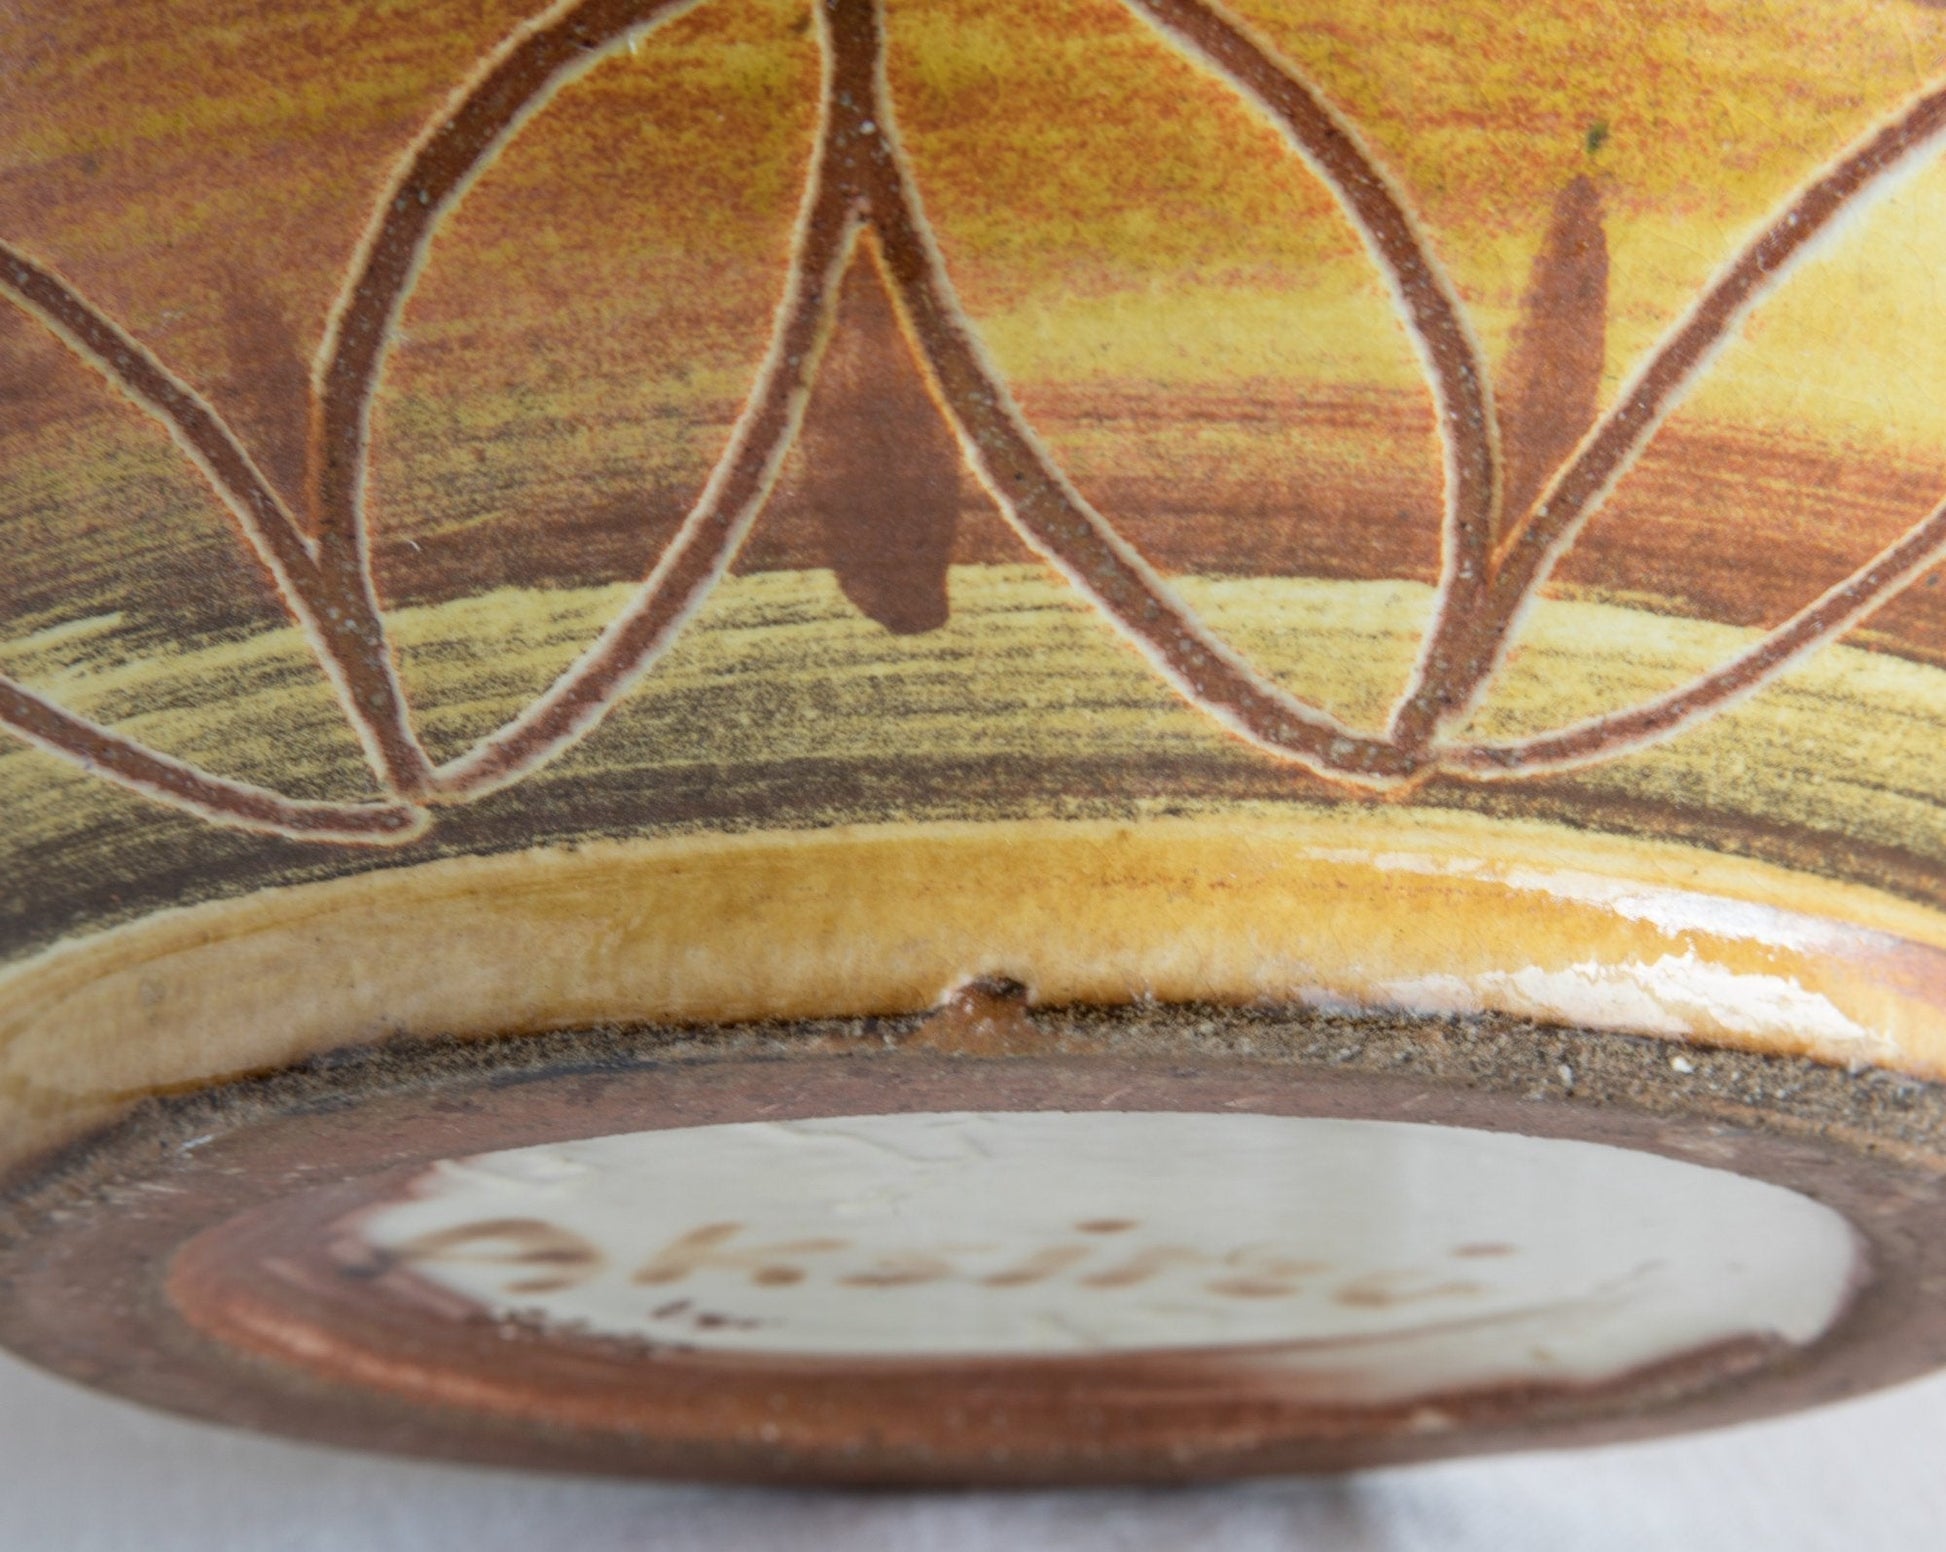 AKSEL SIGVALD NIELSEN Knabstrup Geometric Patterned Yellow Orange Glazed Ceramic Floor Vase Mollaris.com 